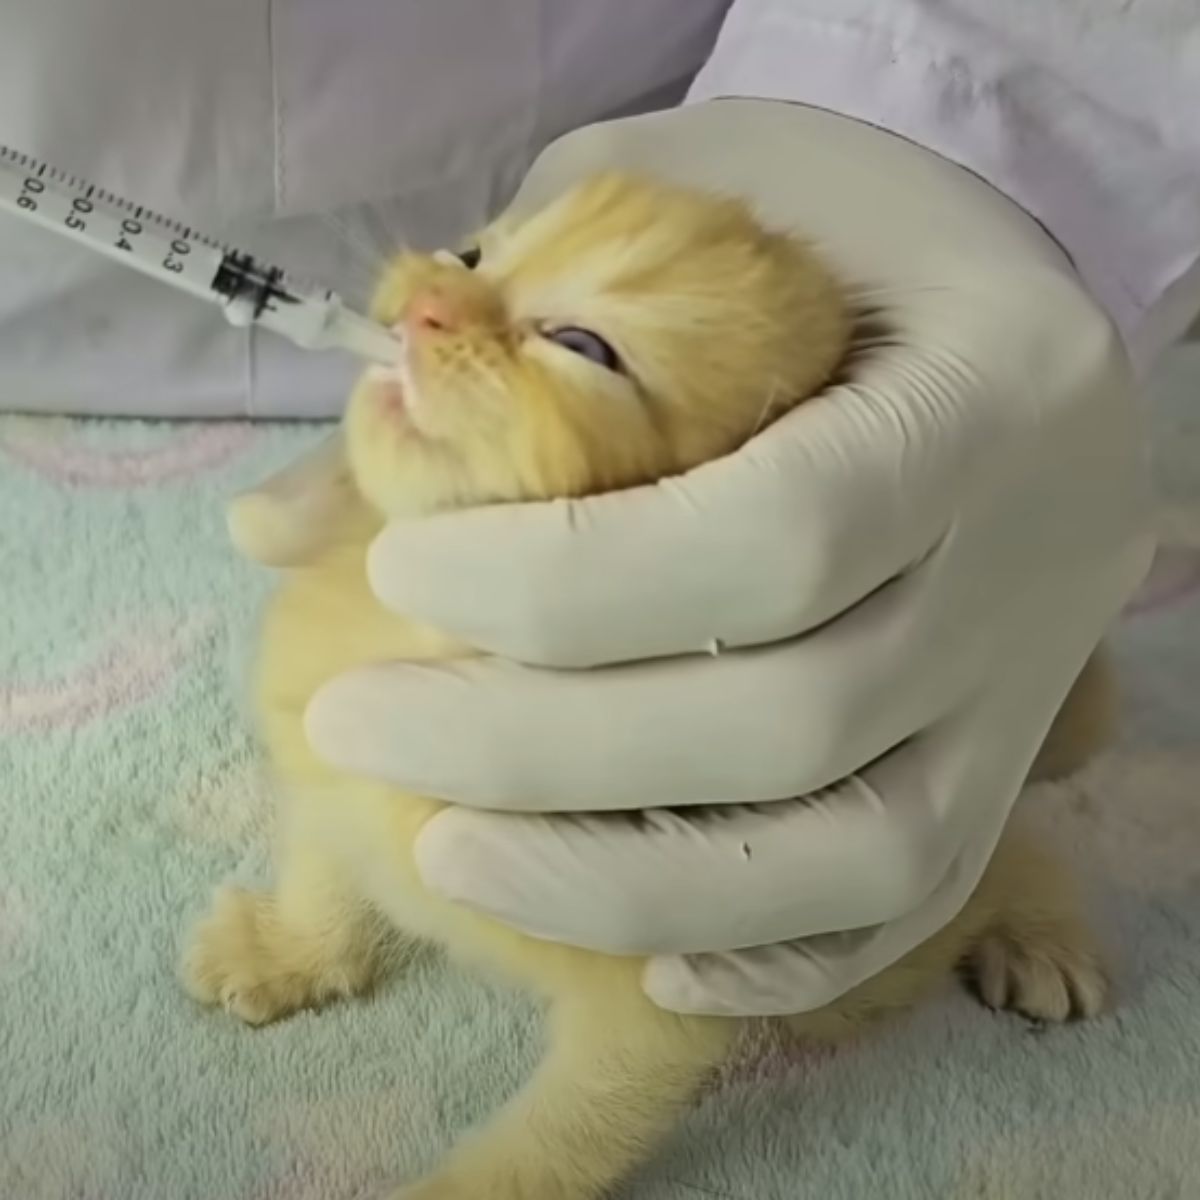 kitten getting medicine